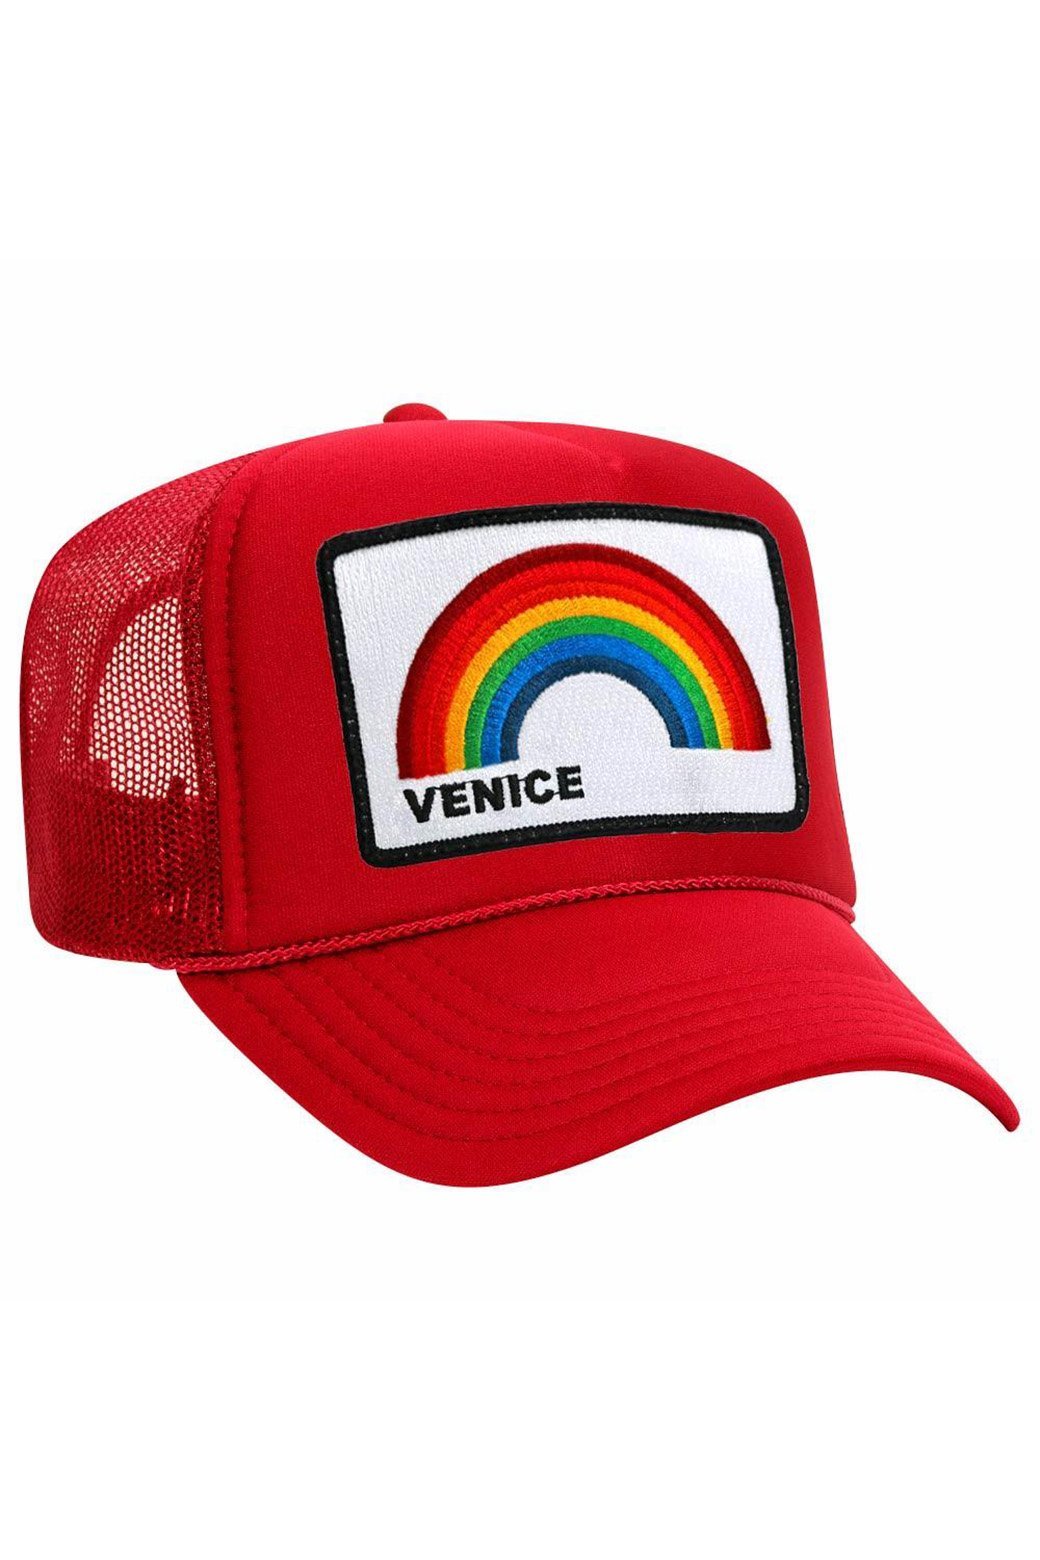 VENICE RAINBOW TRUCKER HAT HATS Aviator Nation OS BLACK 